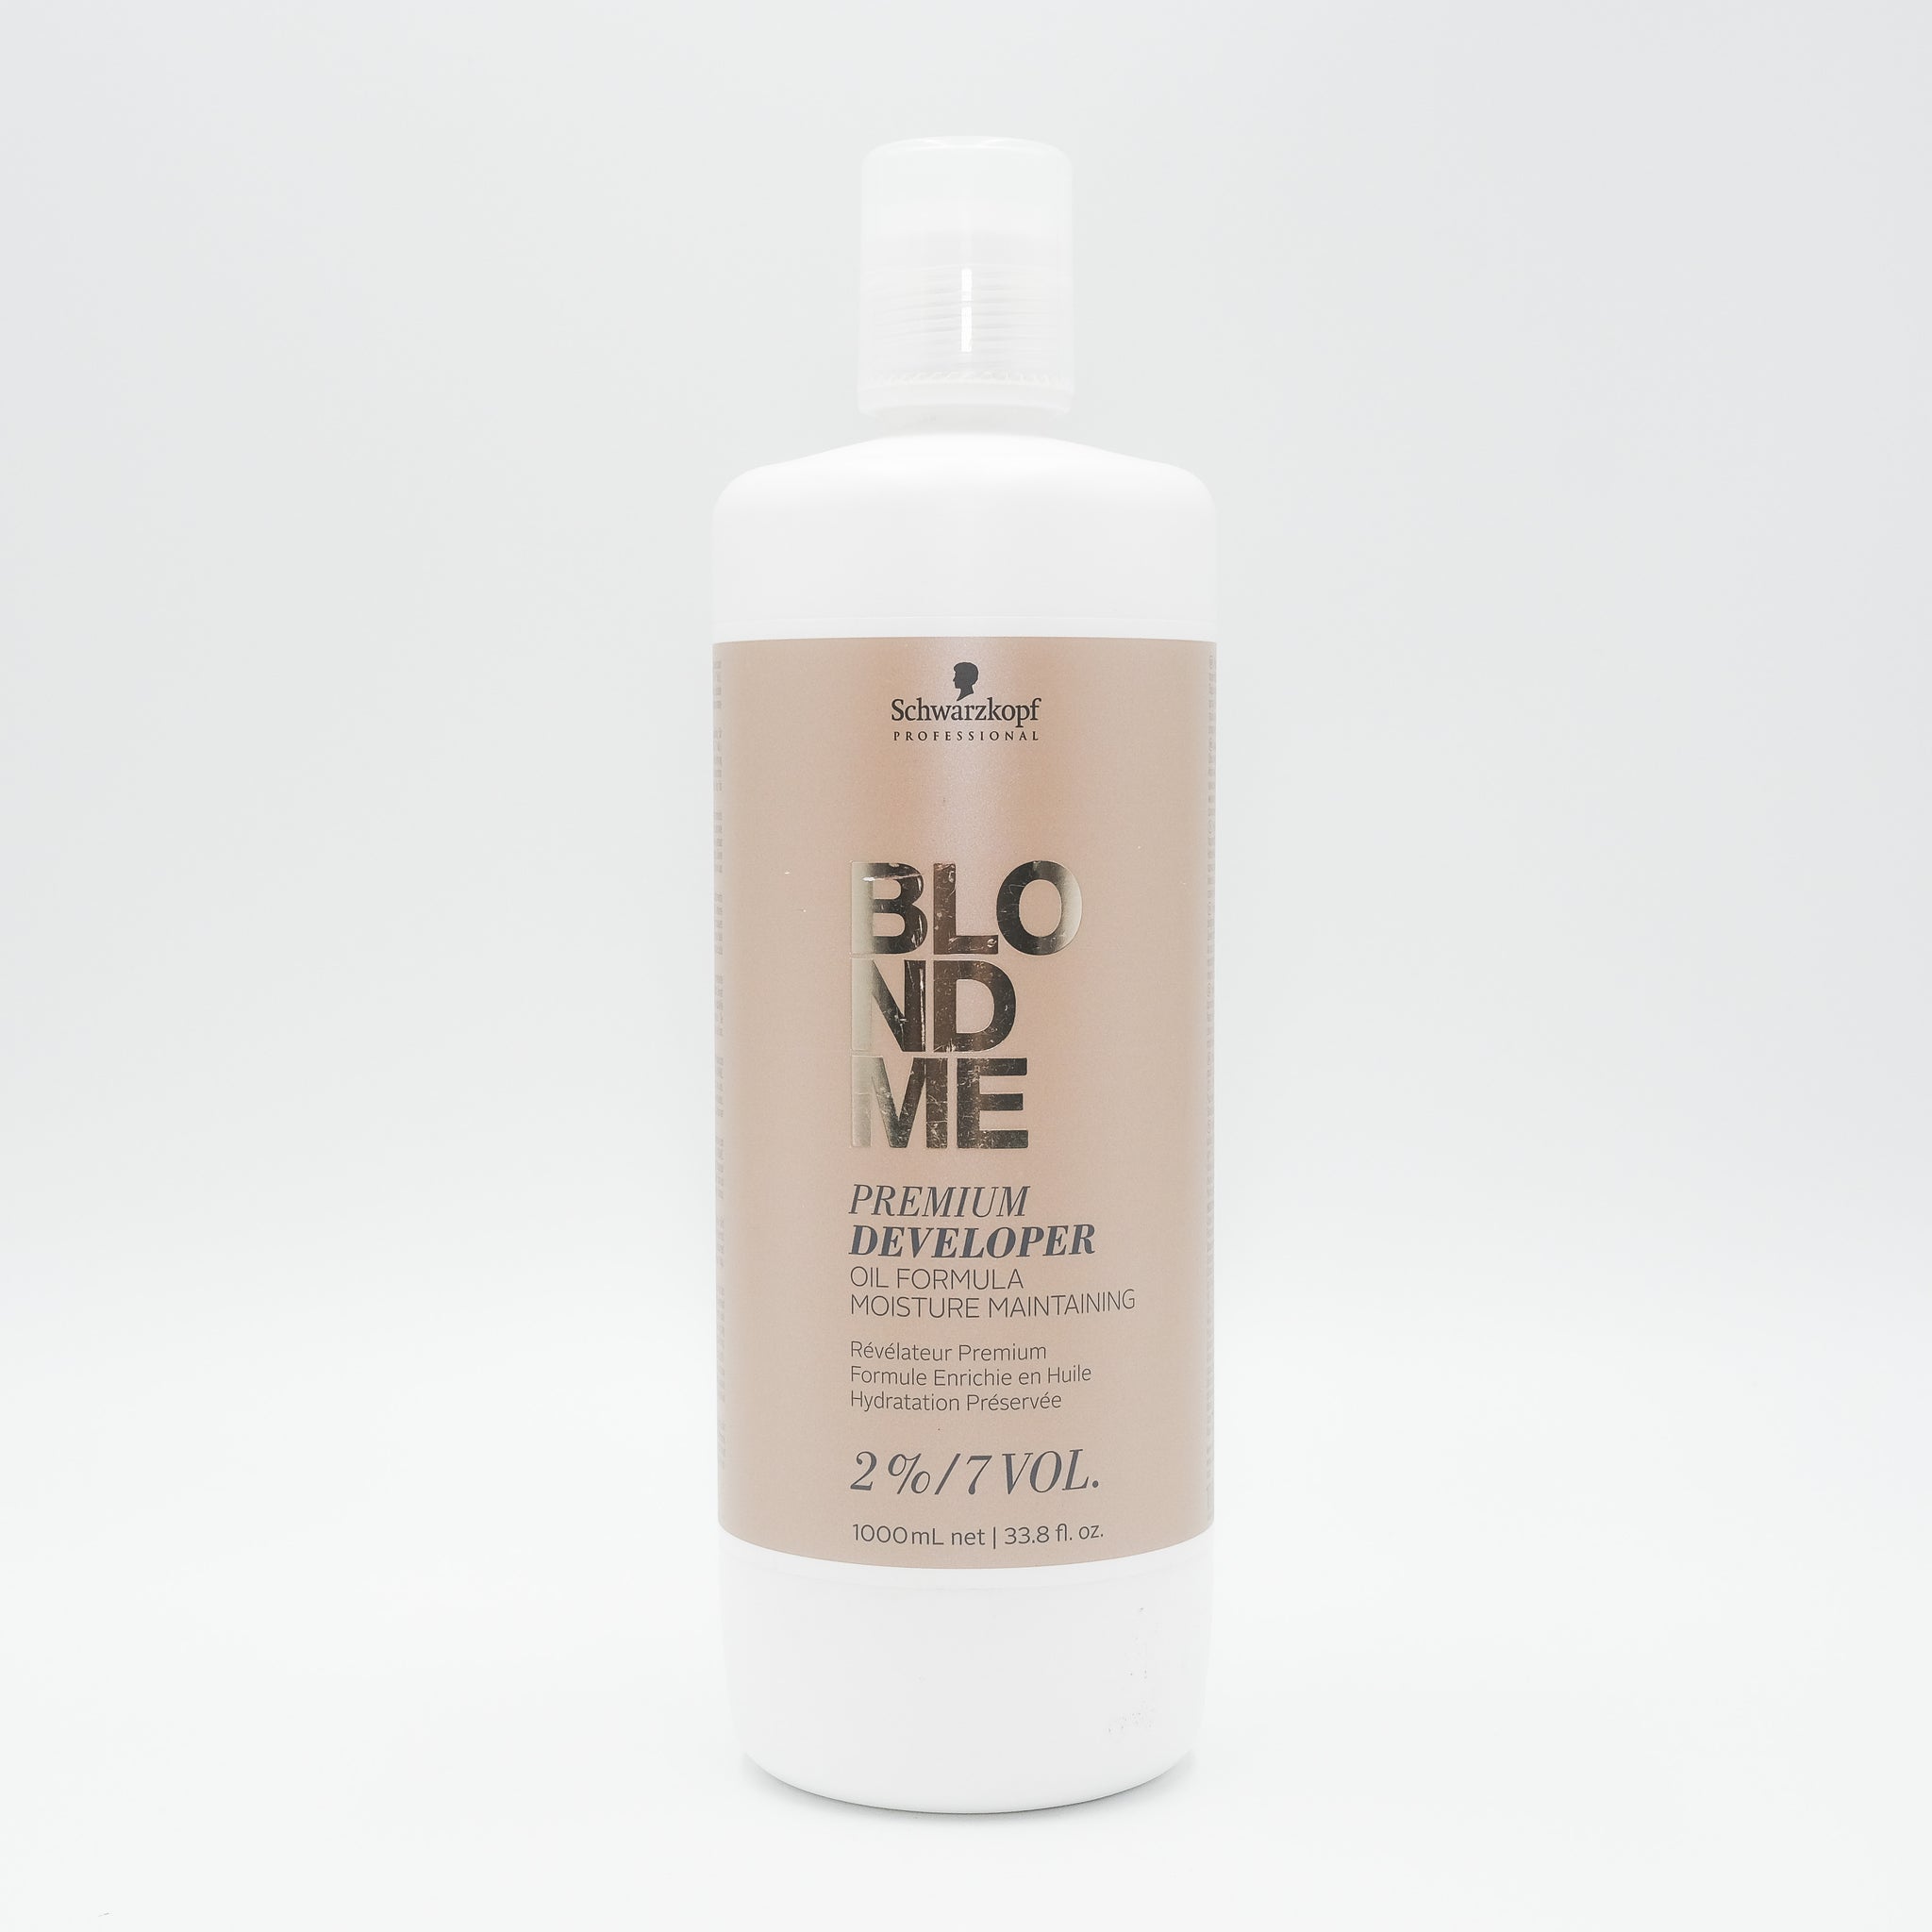 SCHWARZKOPF BlondMe Premium Developer 2% 7 Vol Oil Formula 33.8 oz